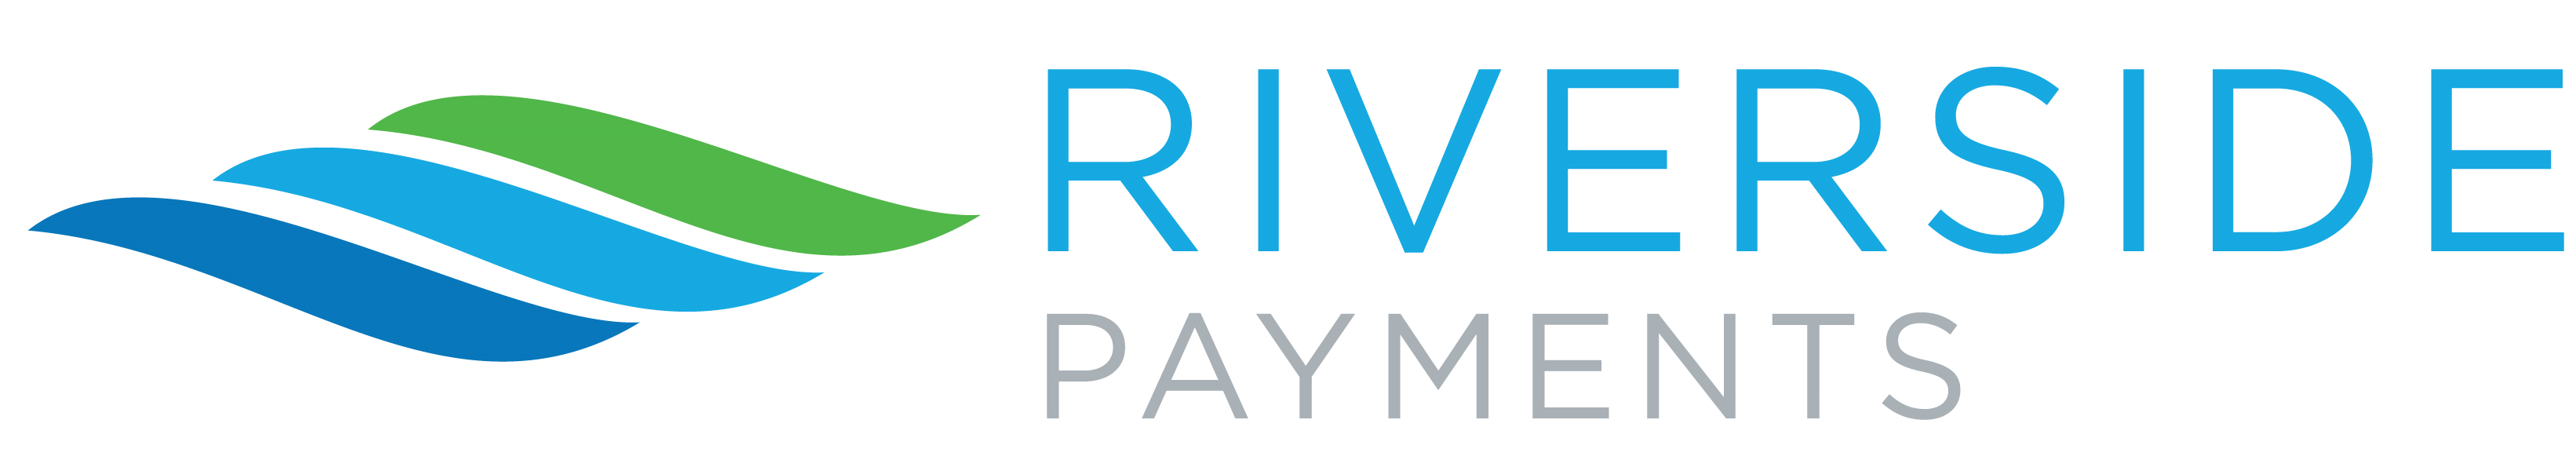 Riverside Payments logo